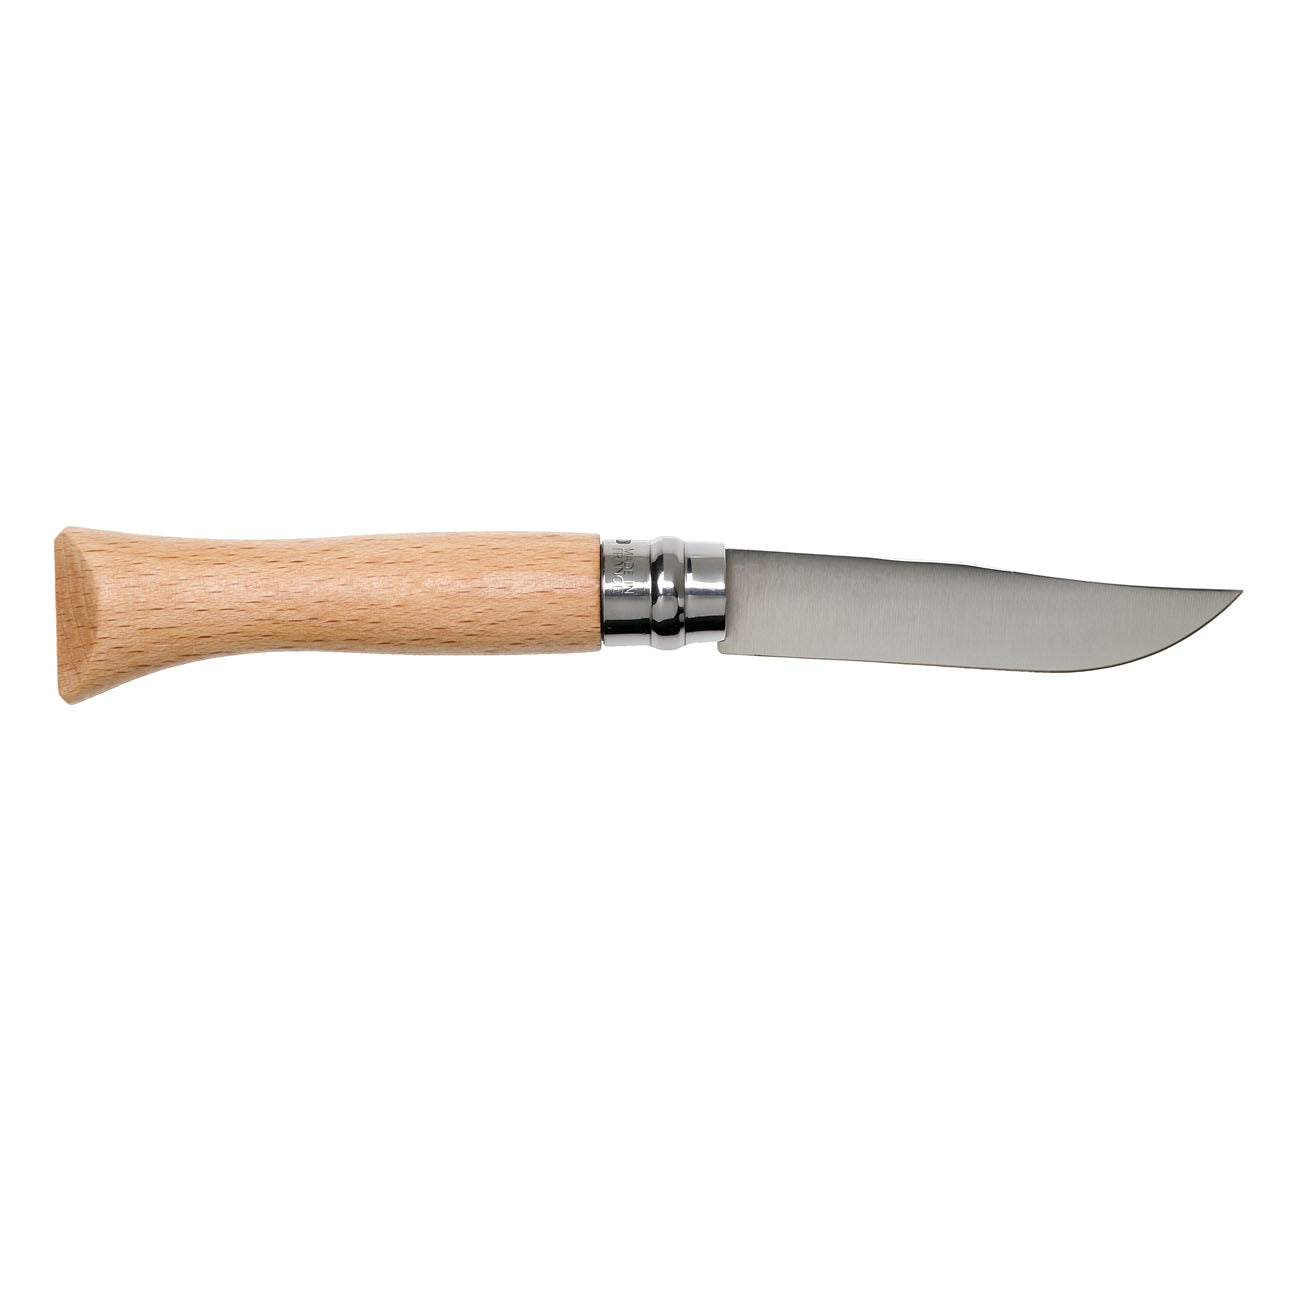 Opinel Pocketknife Regular N°06